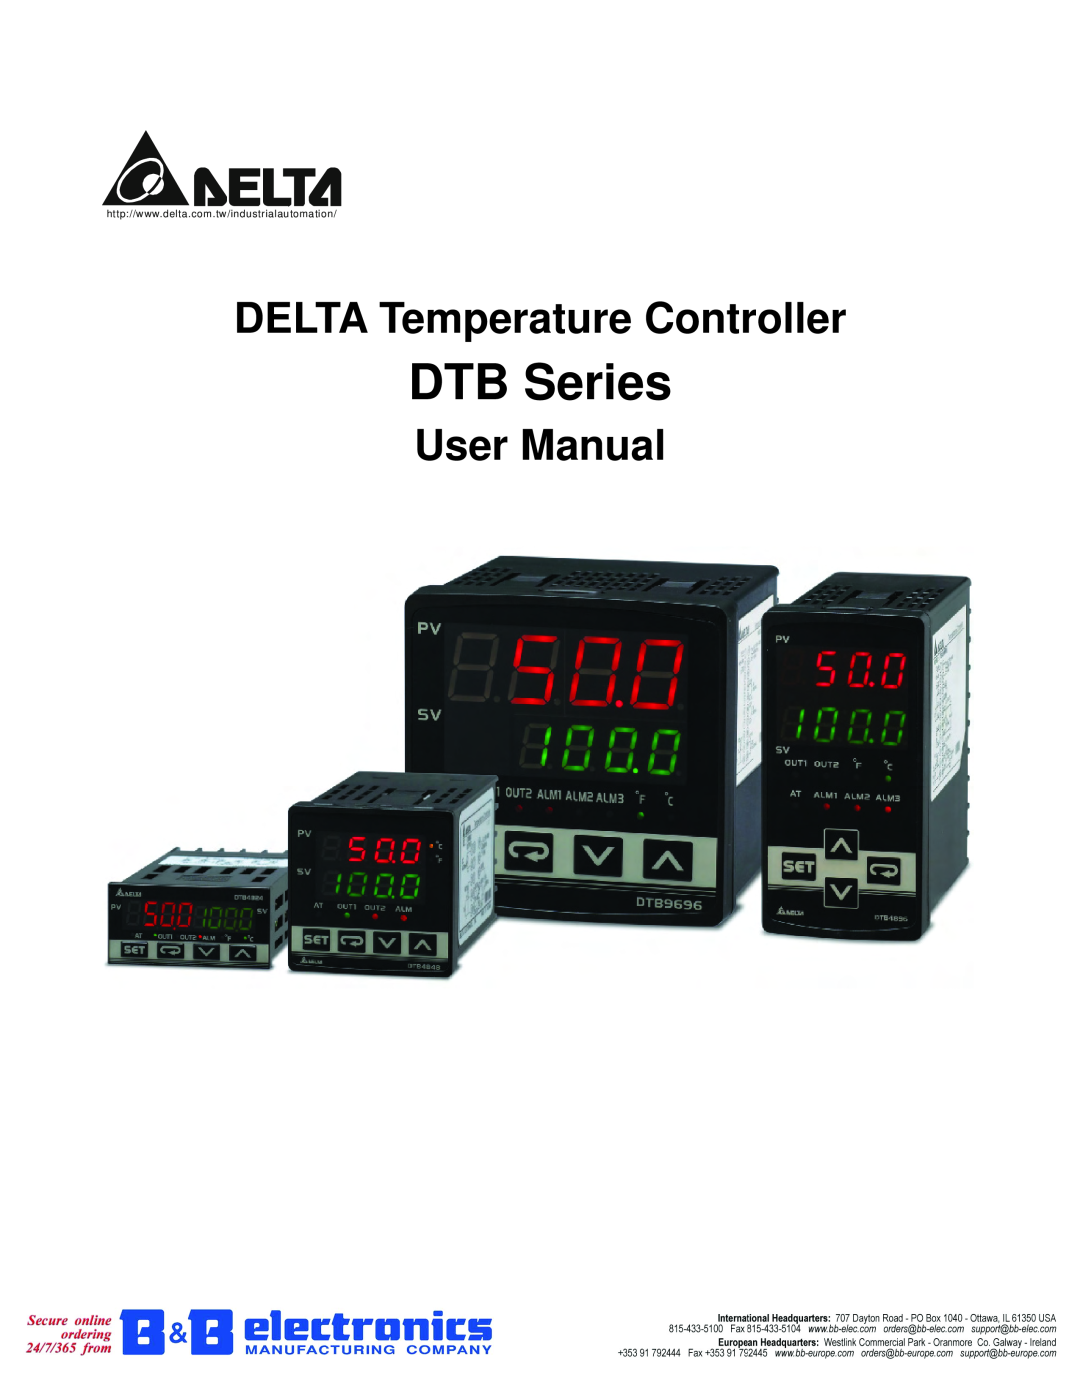 B&B Electronics DTB Series user manual DELTA Temperature Controller, User Manual 